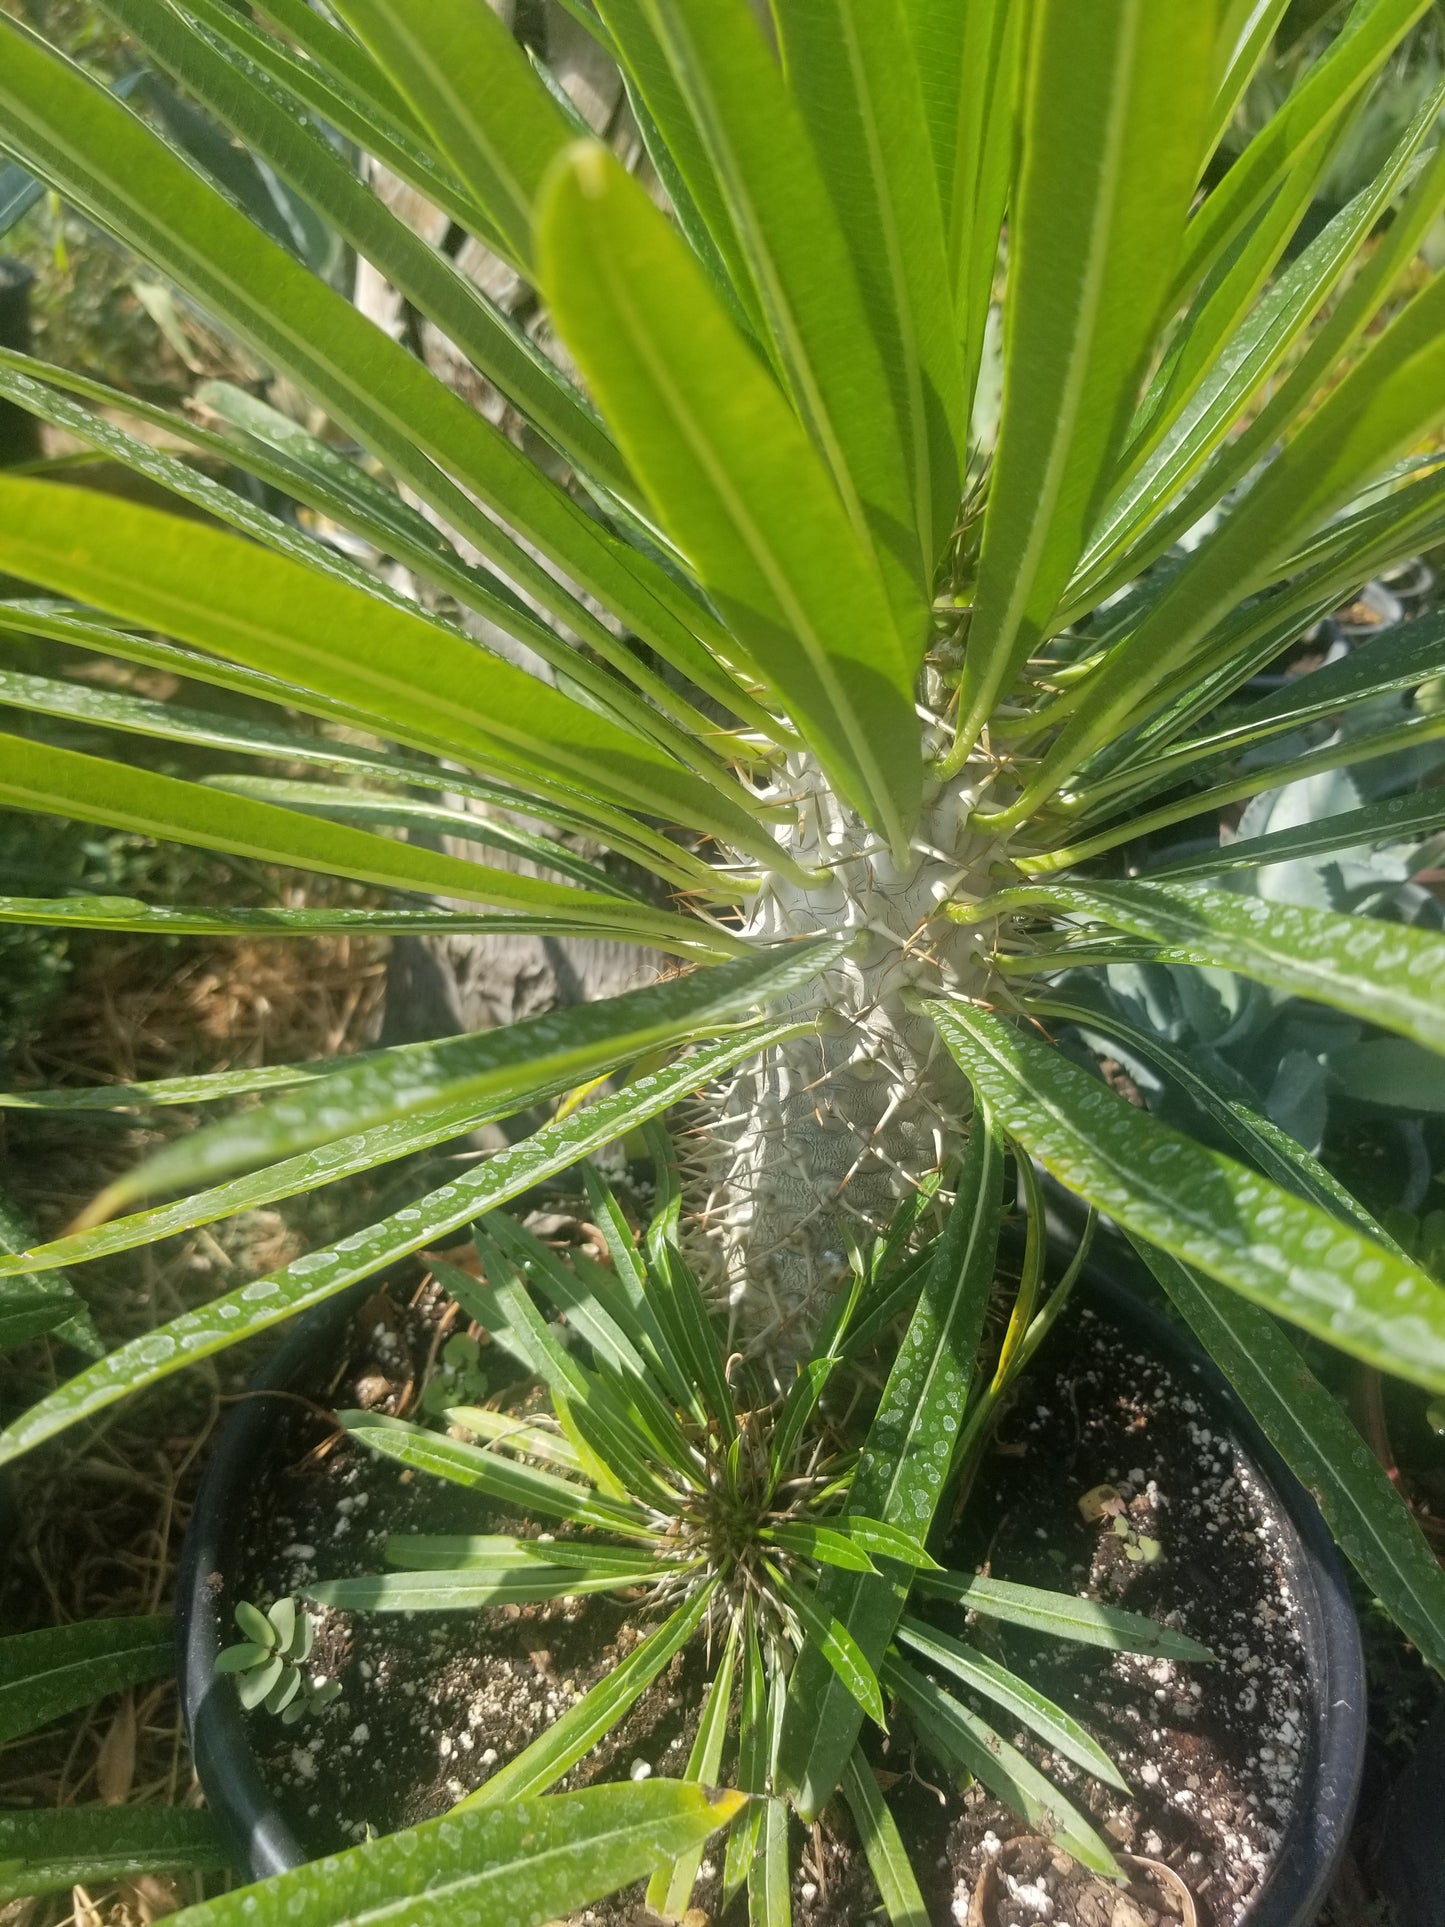 Madagascar Palm Pachypodium Lamerei (3 Gal. Pot)